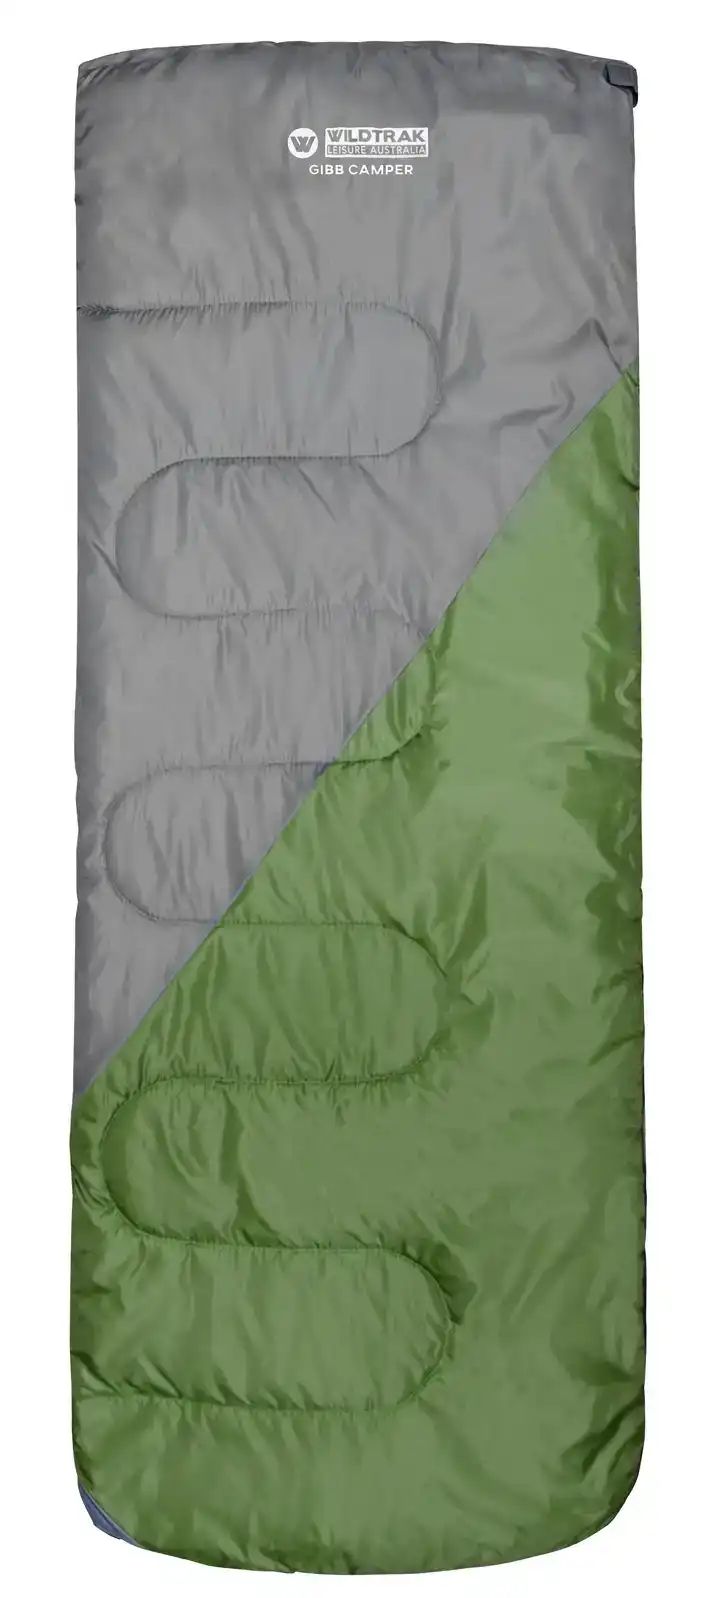 Wildtrak Gibb 180x70cm Camper Sleeping Bag Thermal Camping/Hiking Grey/Green